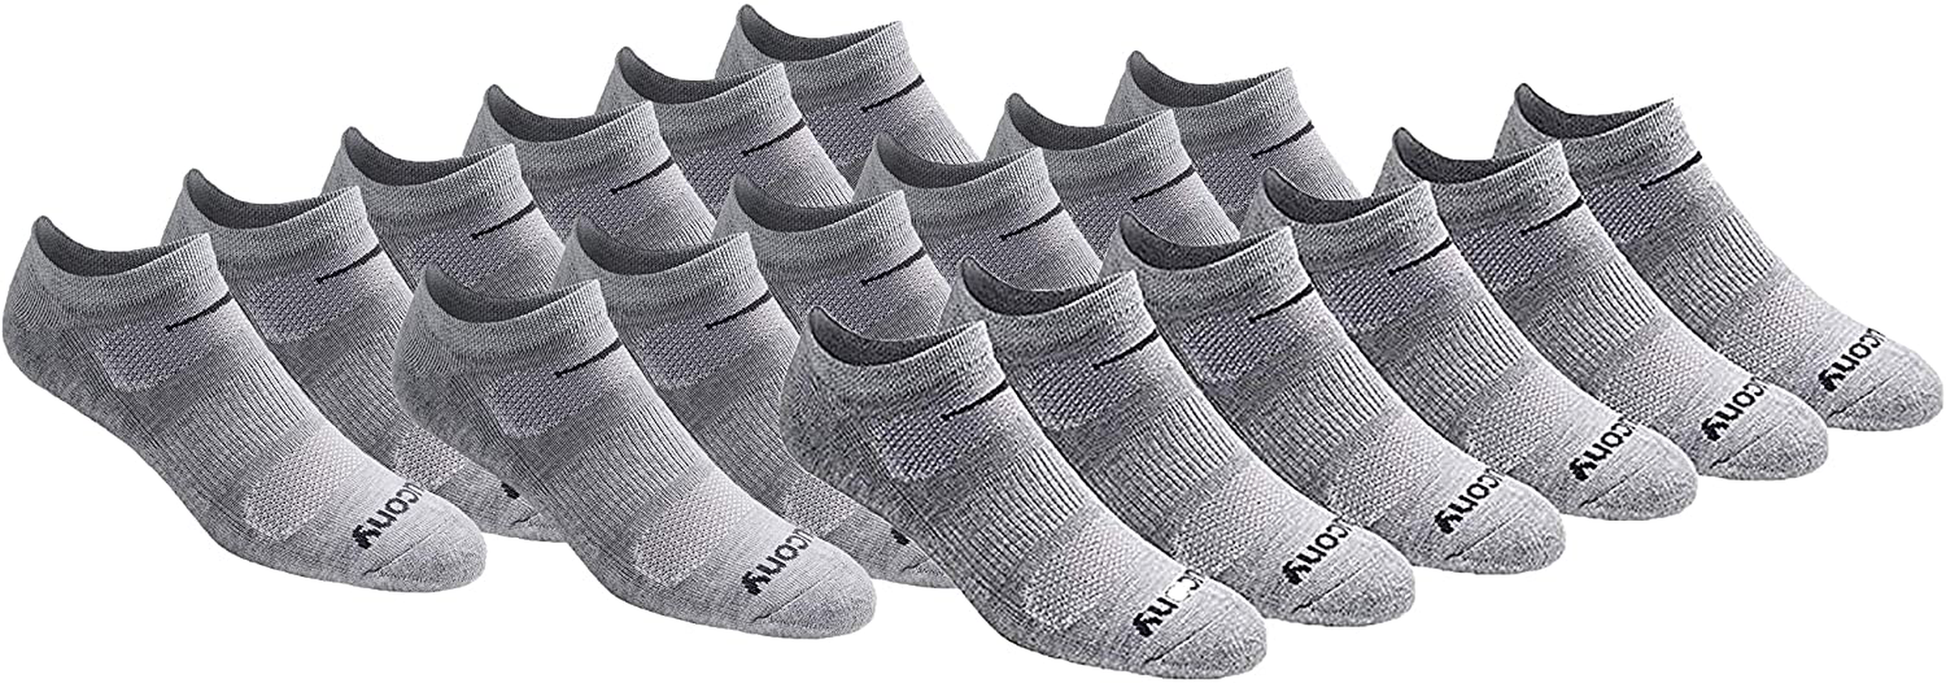 Saucony Mesh Comfort Fit Performance No-Show Grey Basic Men's Socks (18 Pairs) S62009